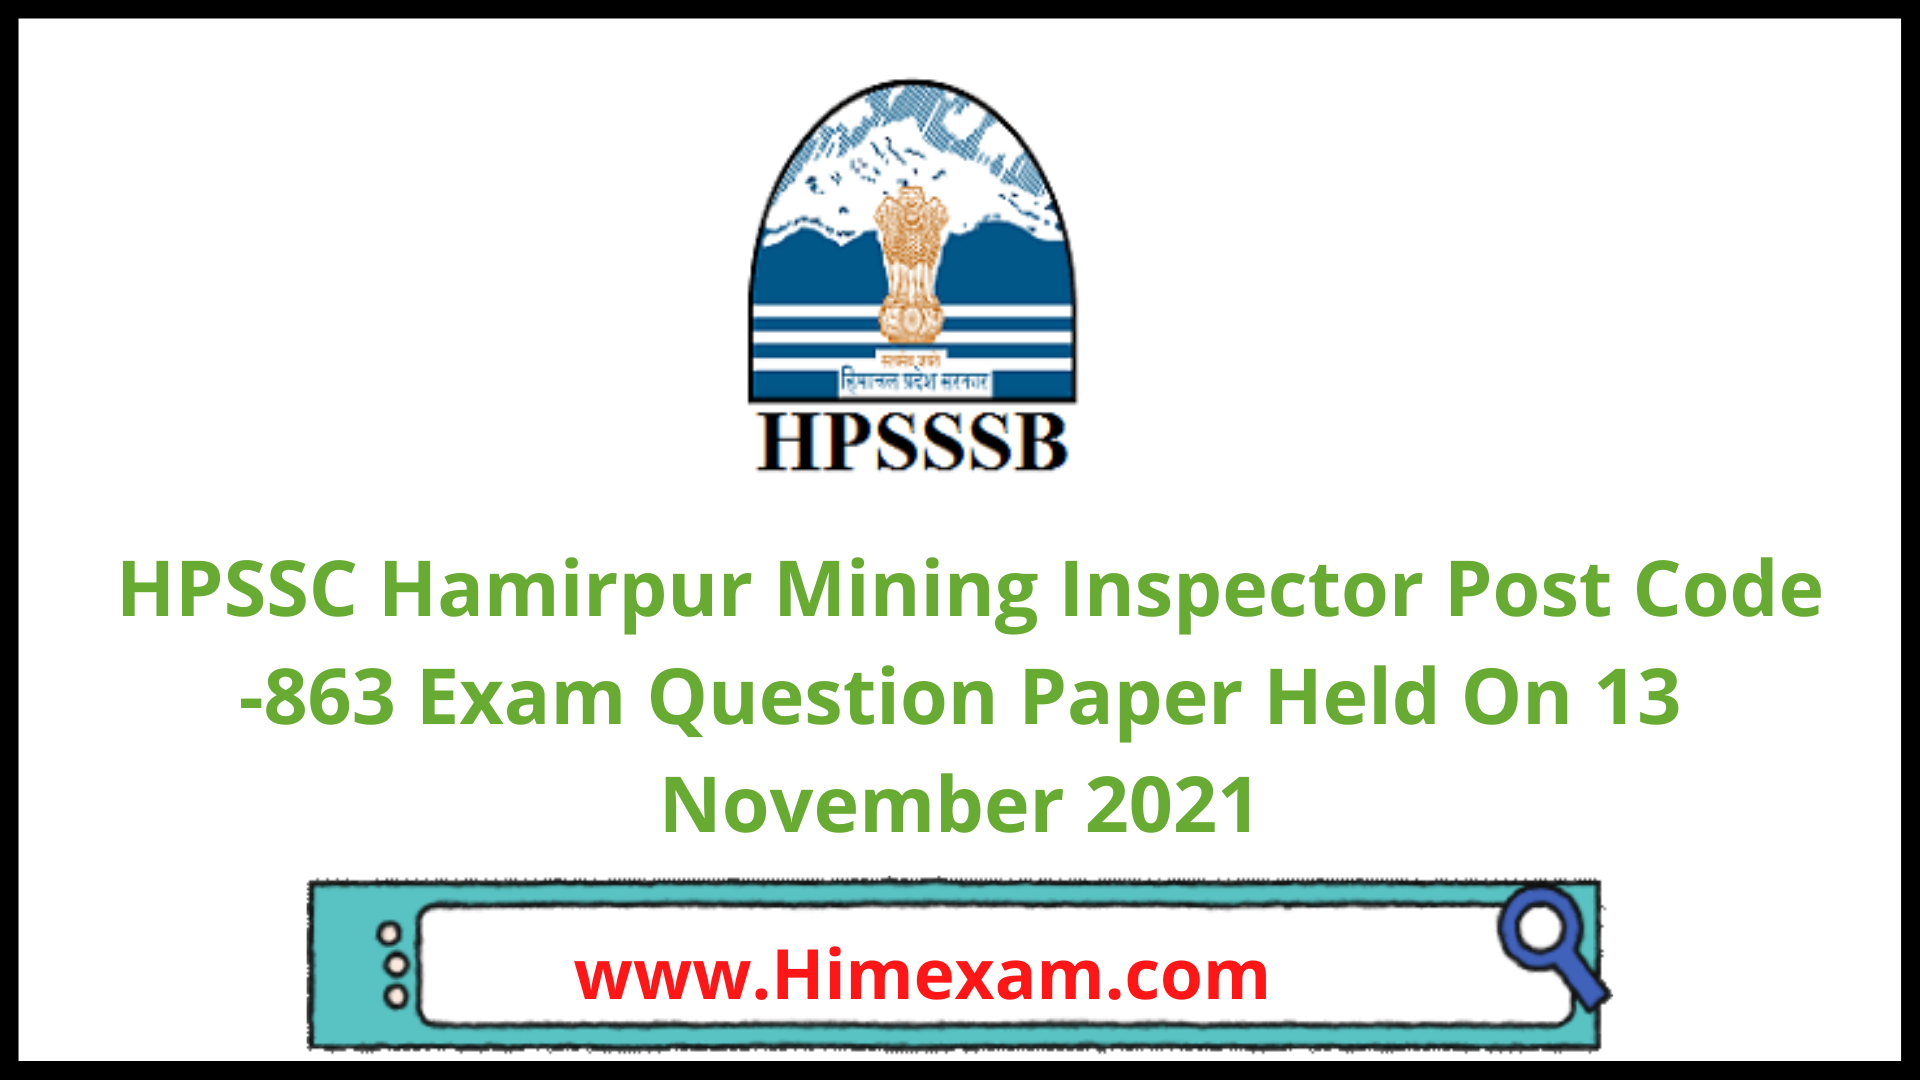 HPSSC Hamirpur Mining Inspector Post Code -863 Exam Question Paper Held On 13 November 2021